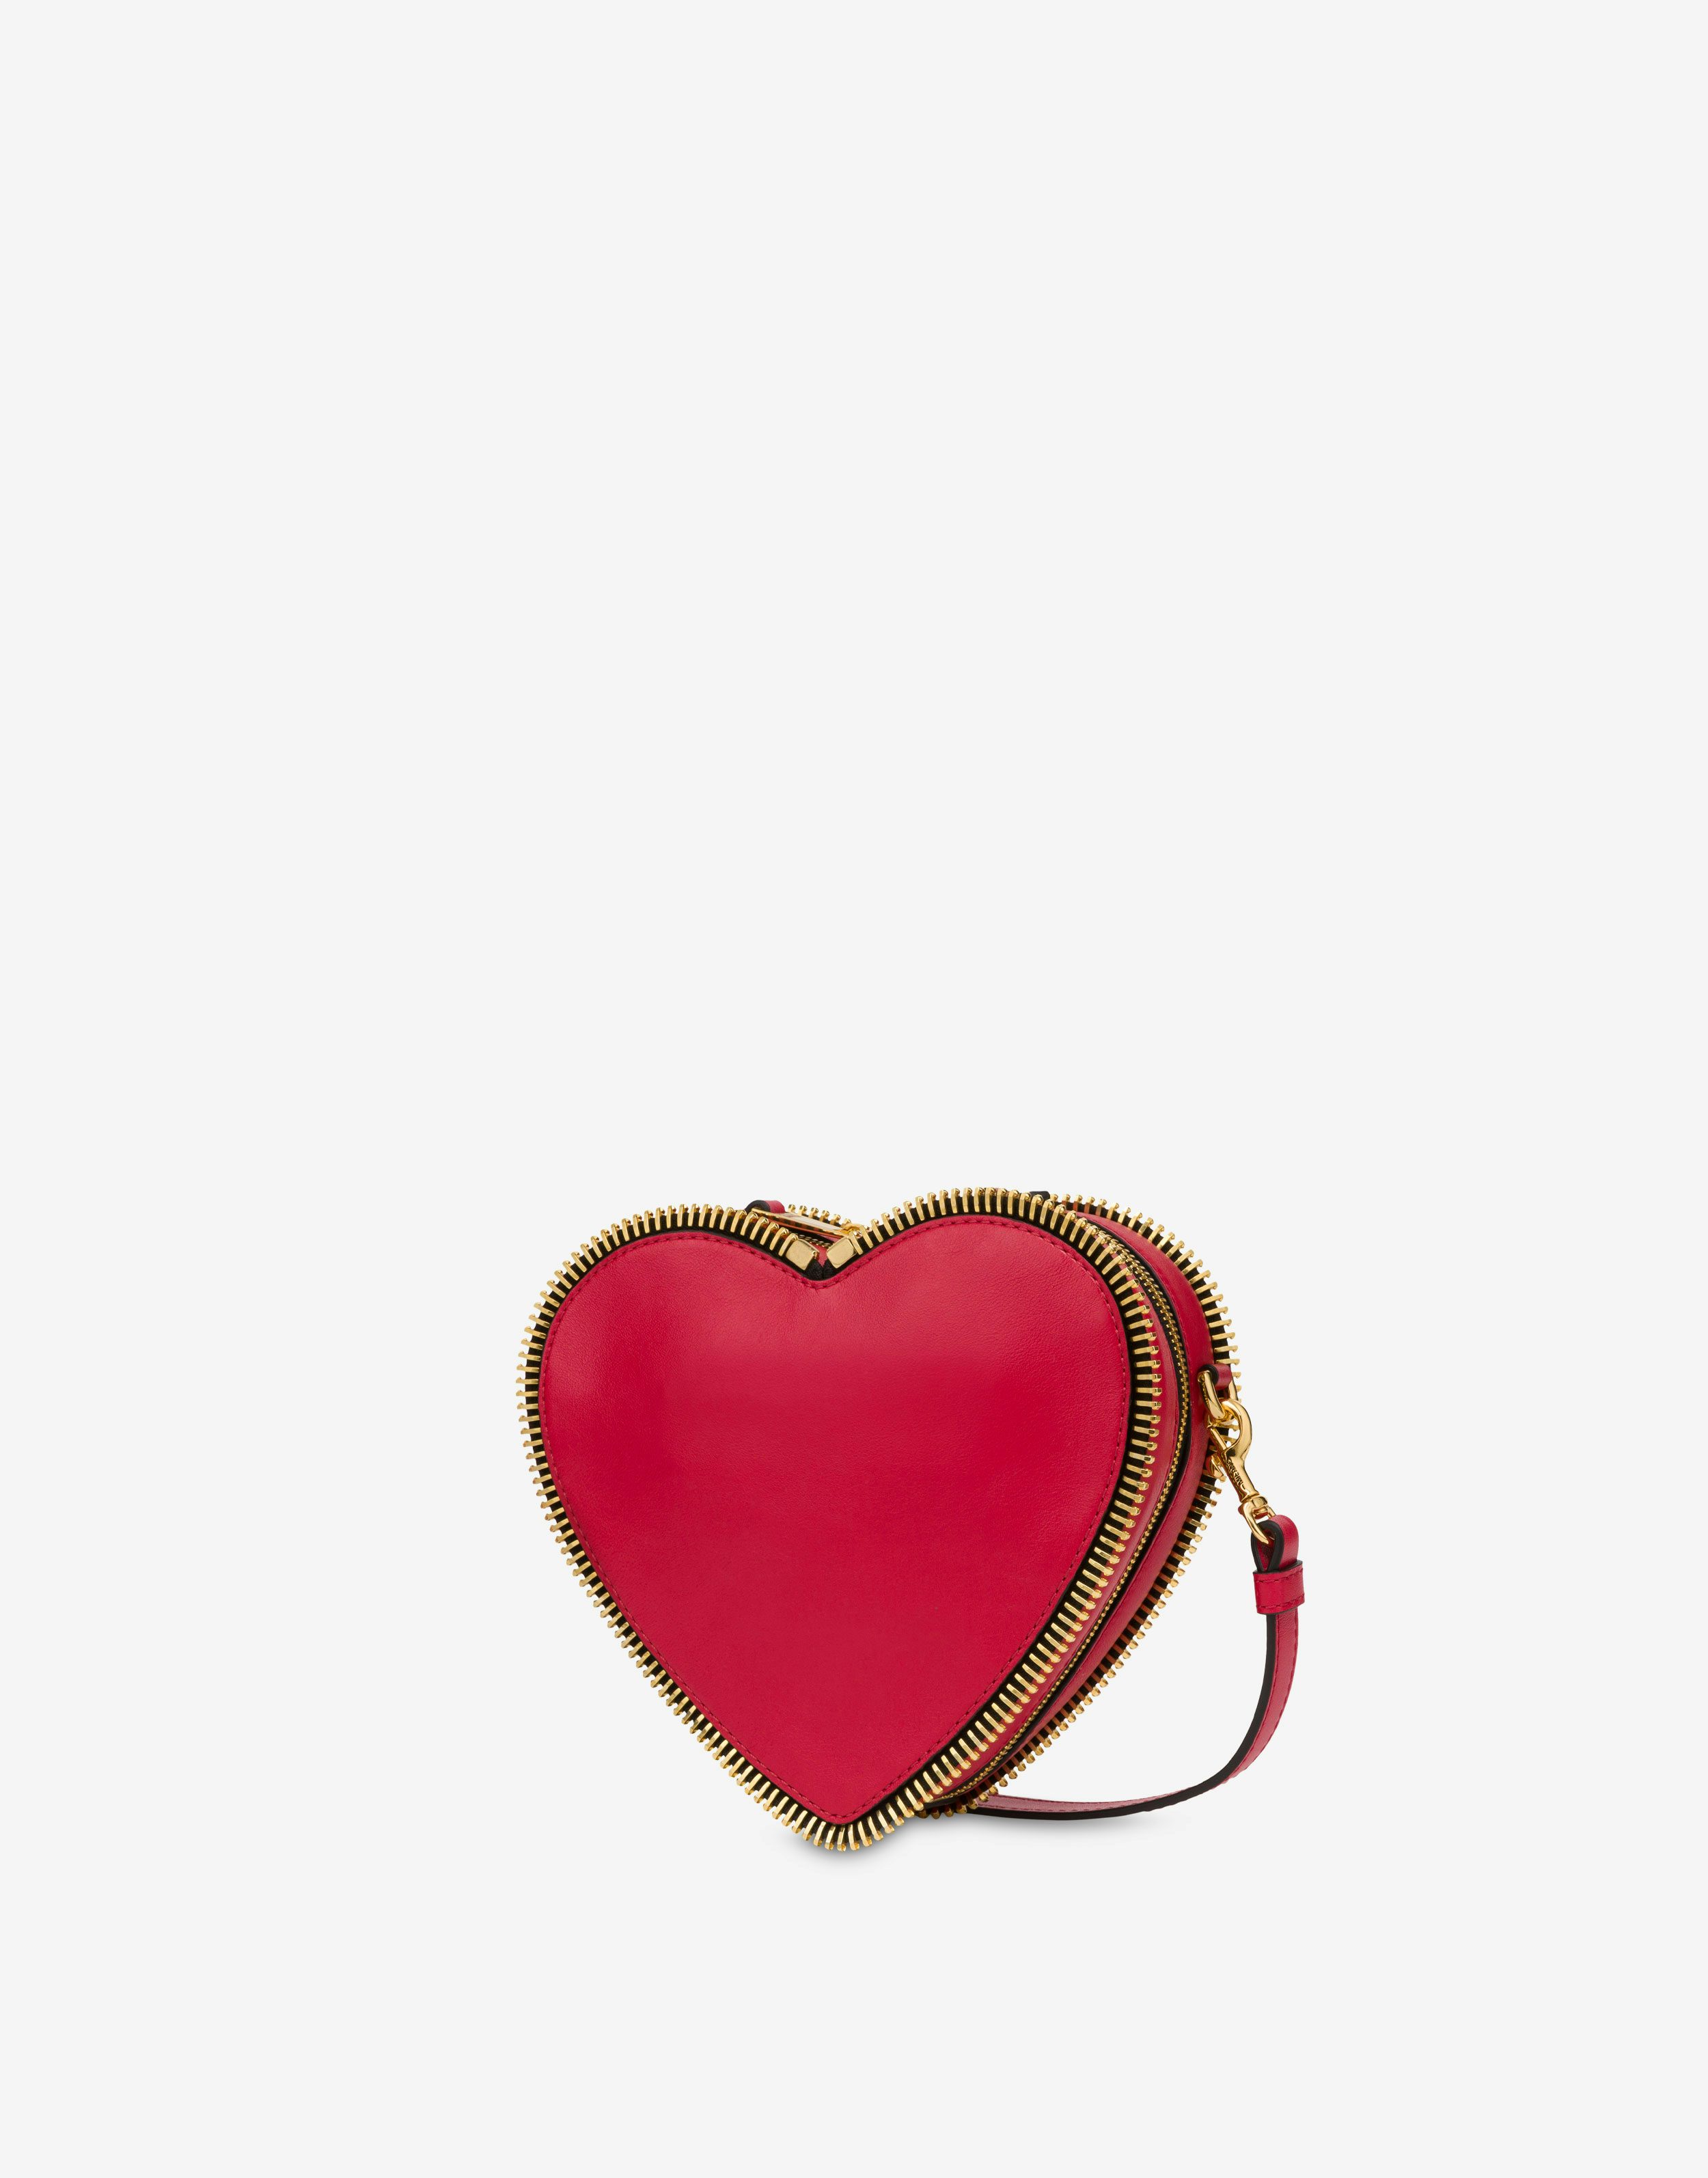 Moschino Rider heart-shaped bag